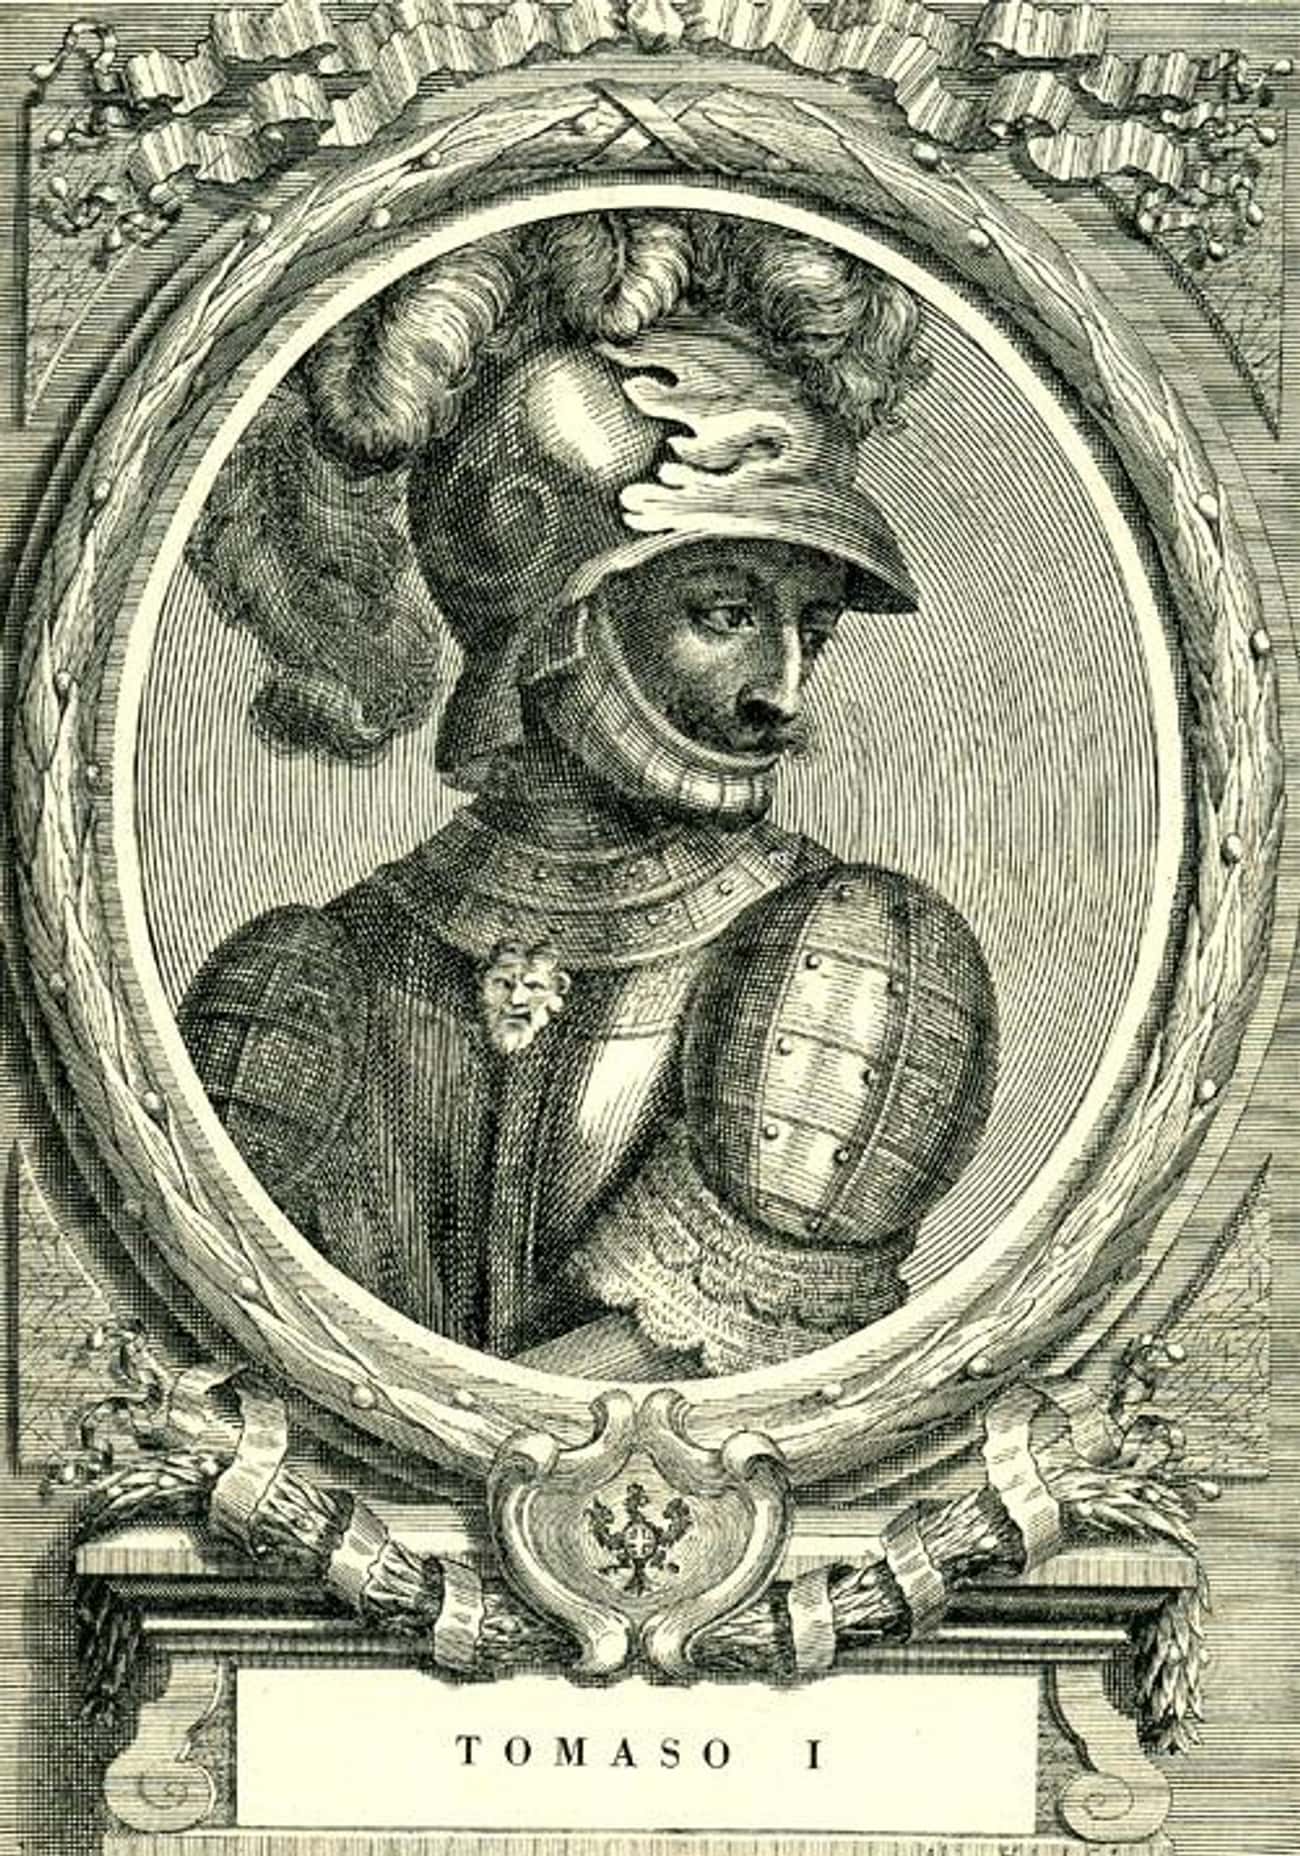 Thomas I, Count of Savoy